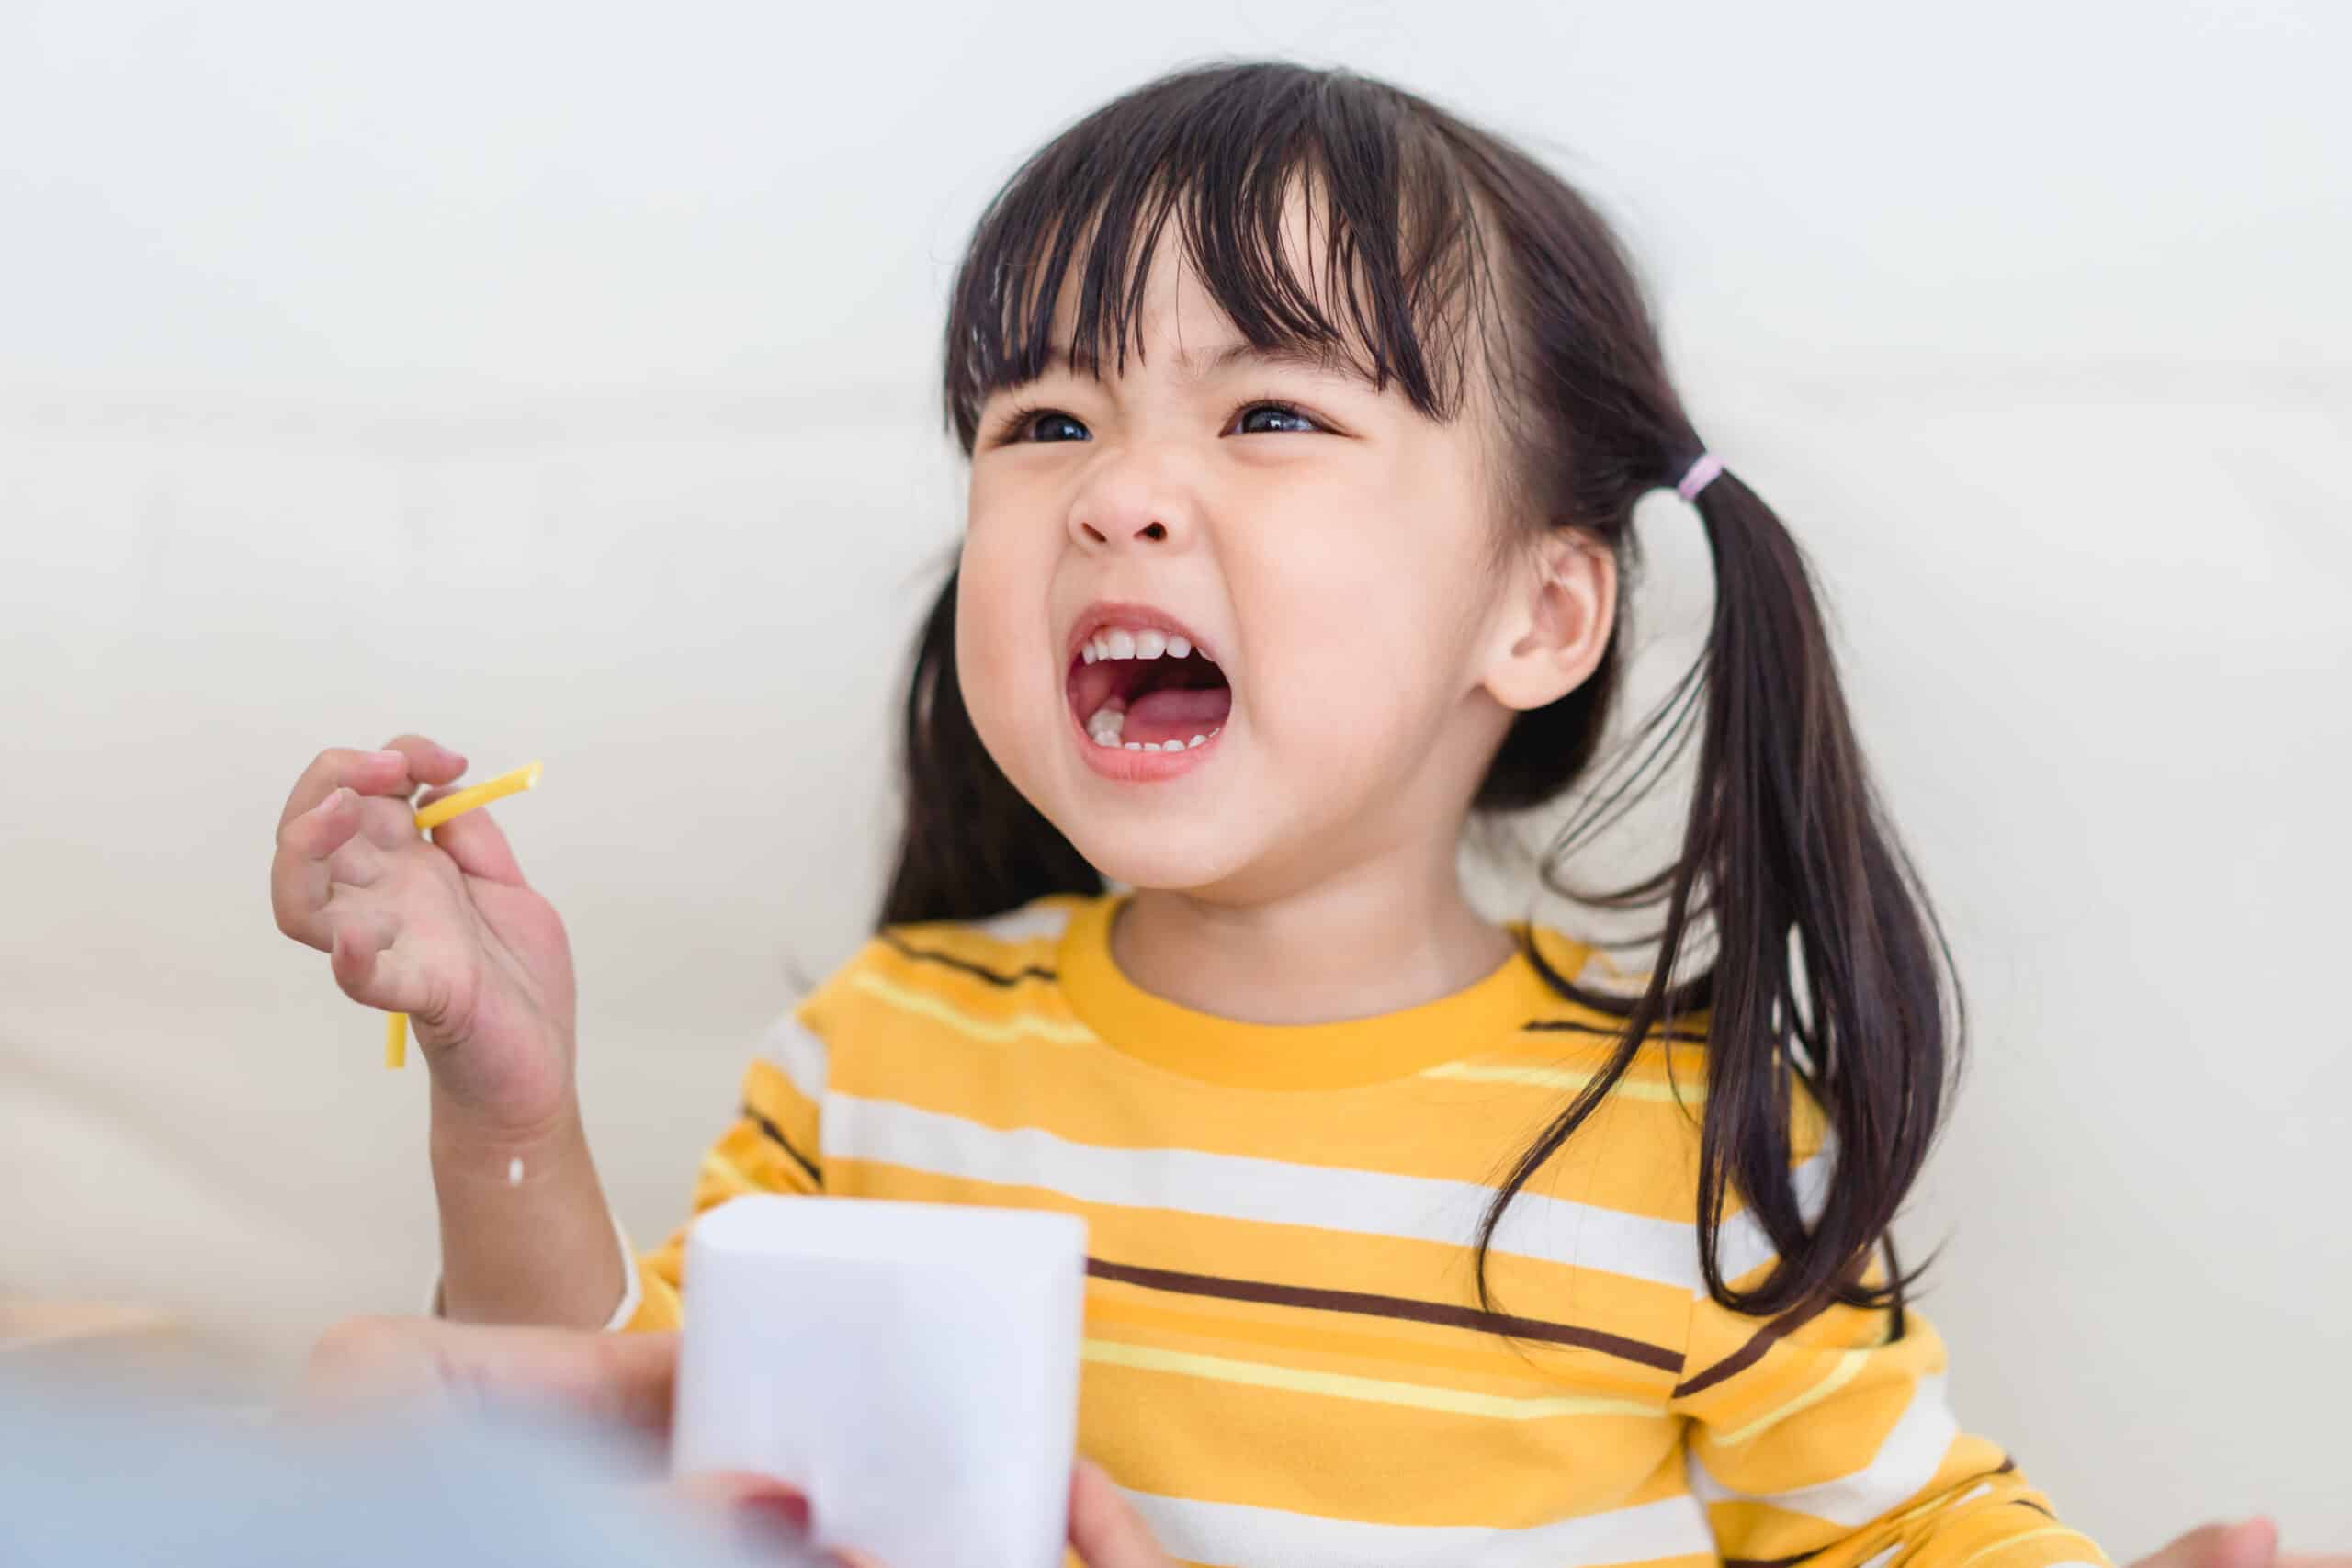 A toddler in a yellow shirt complaining (Shutterstock)